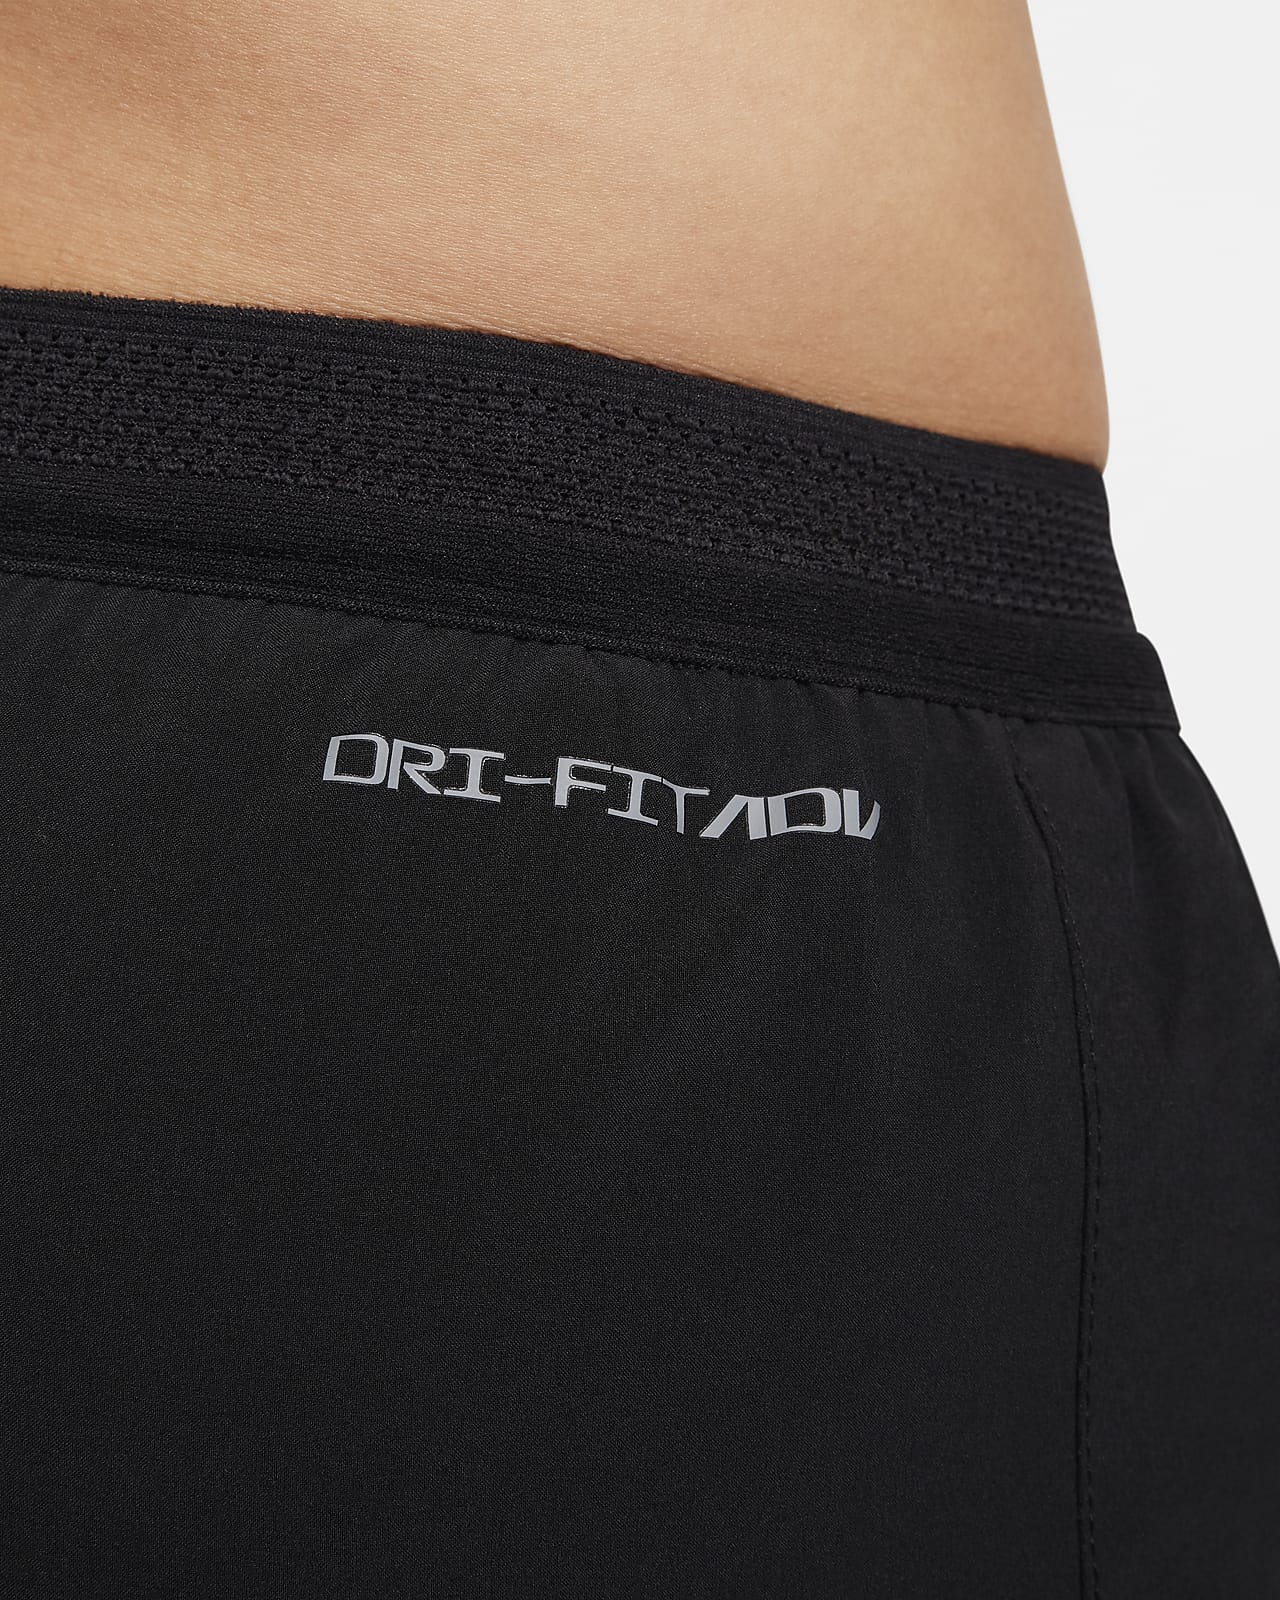 Nike AeroSwift Men's Dri-FIT ADV 10cm (approx.) Brief-Lined Running Shorts.  Nike PH